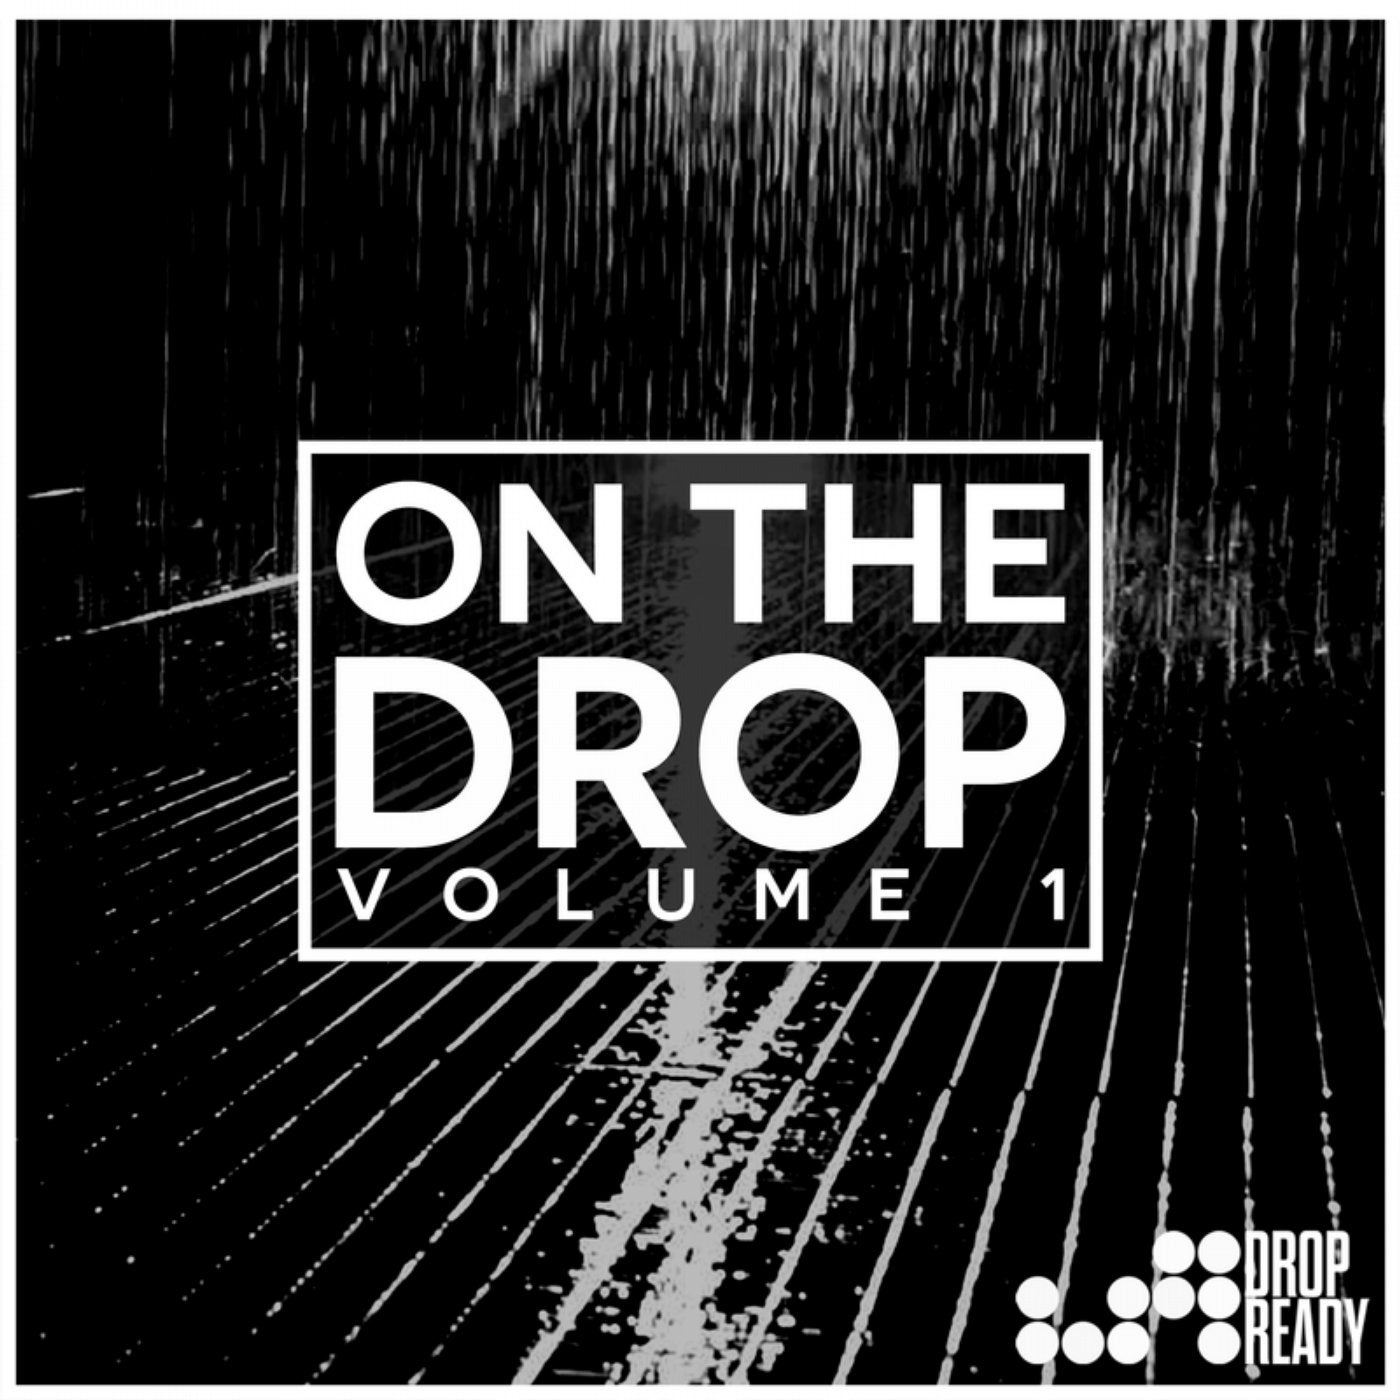 On The Drop Volume 1